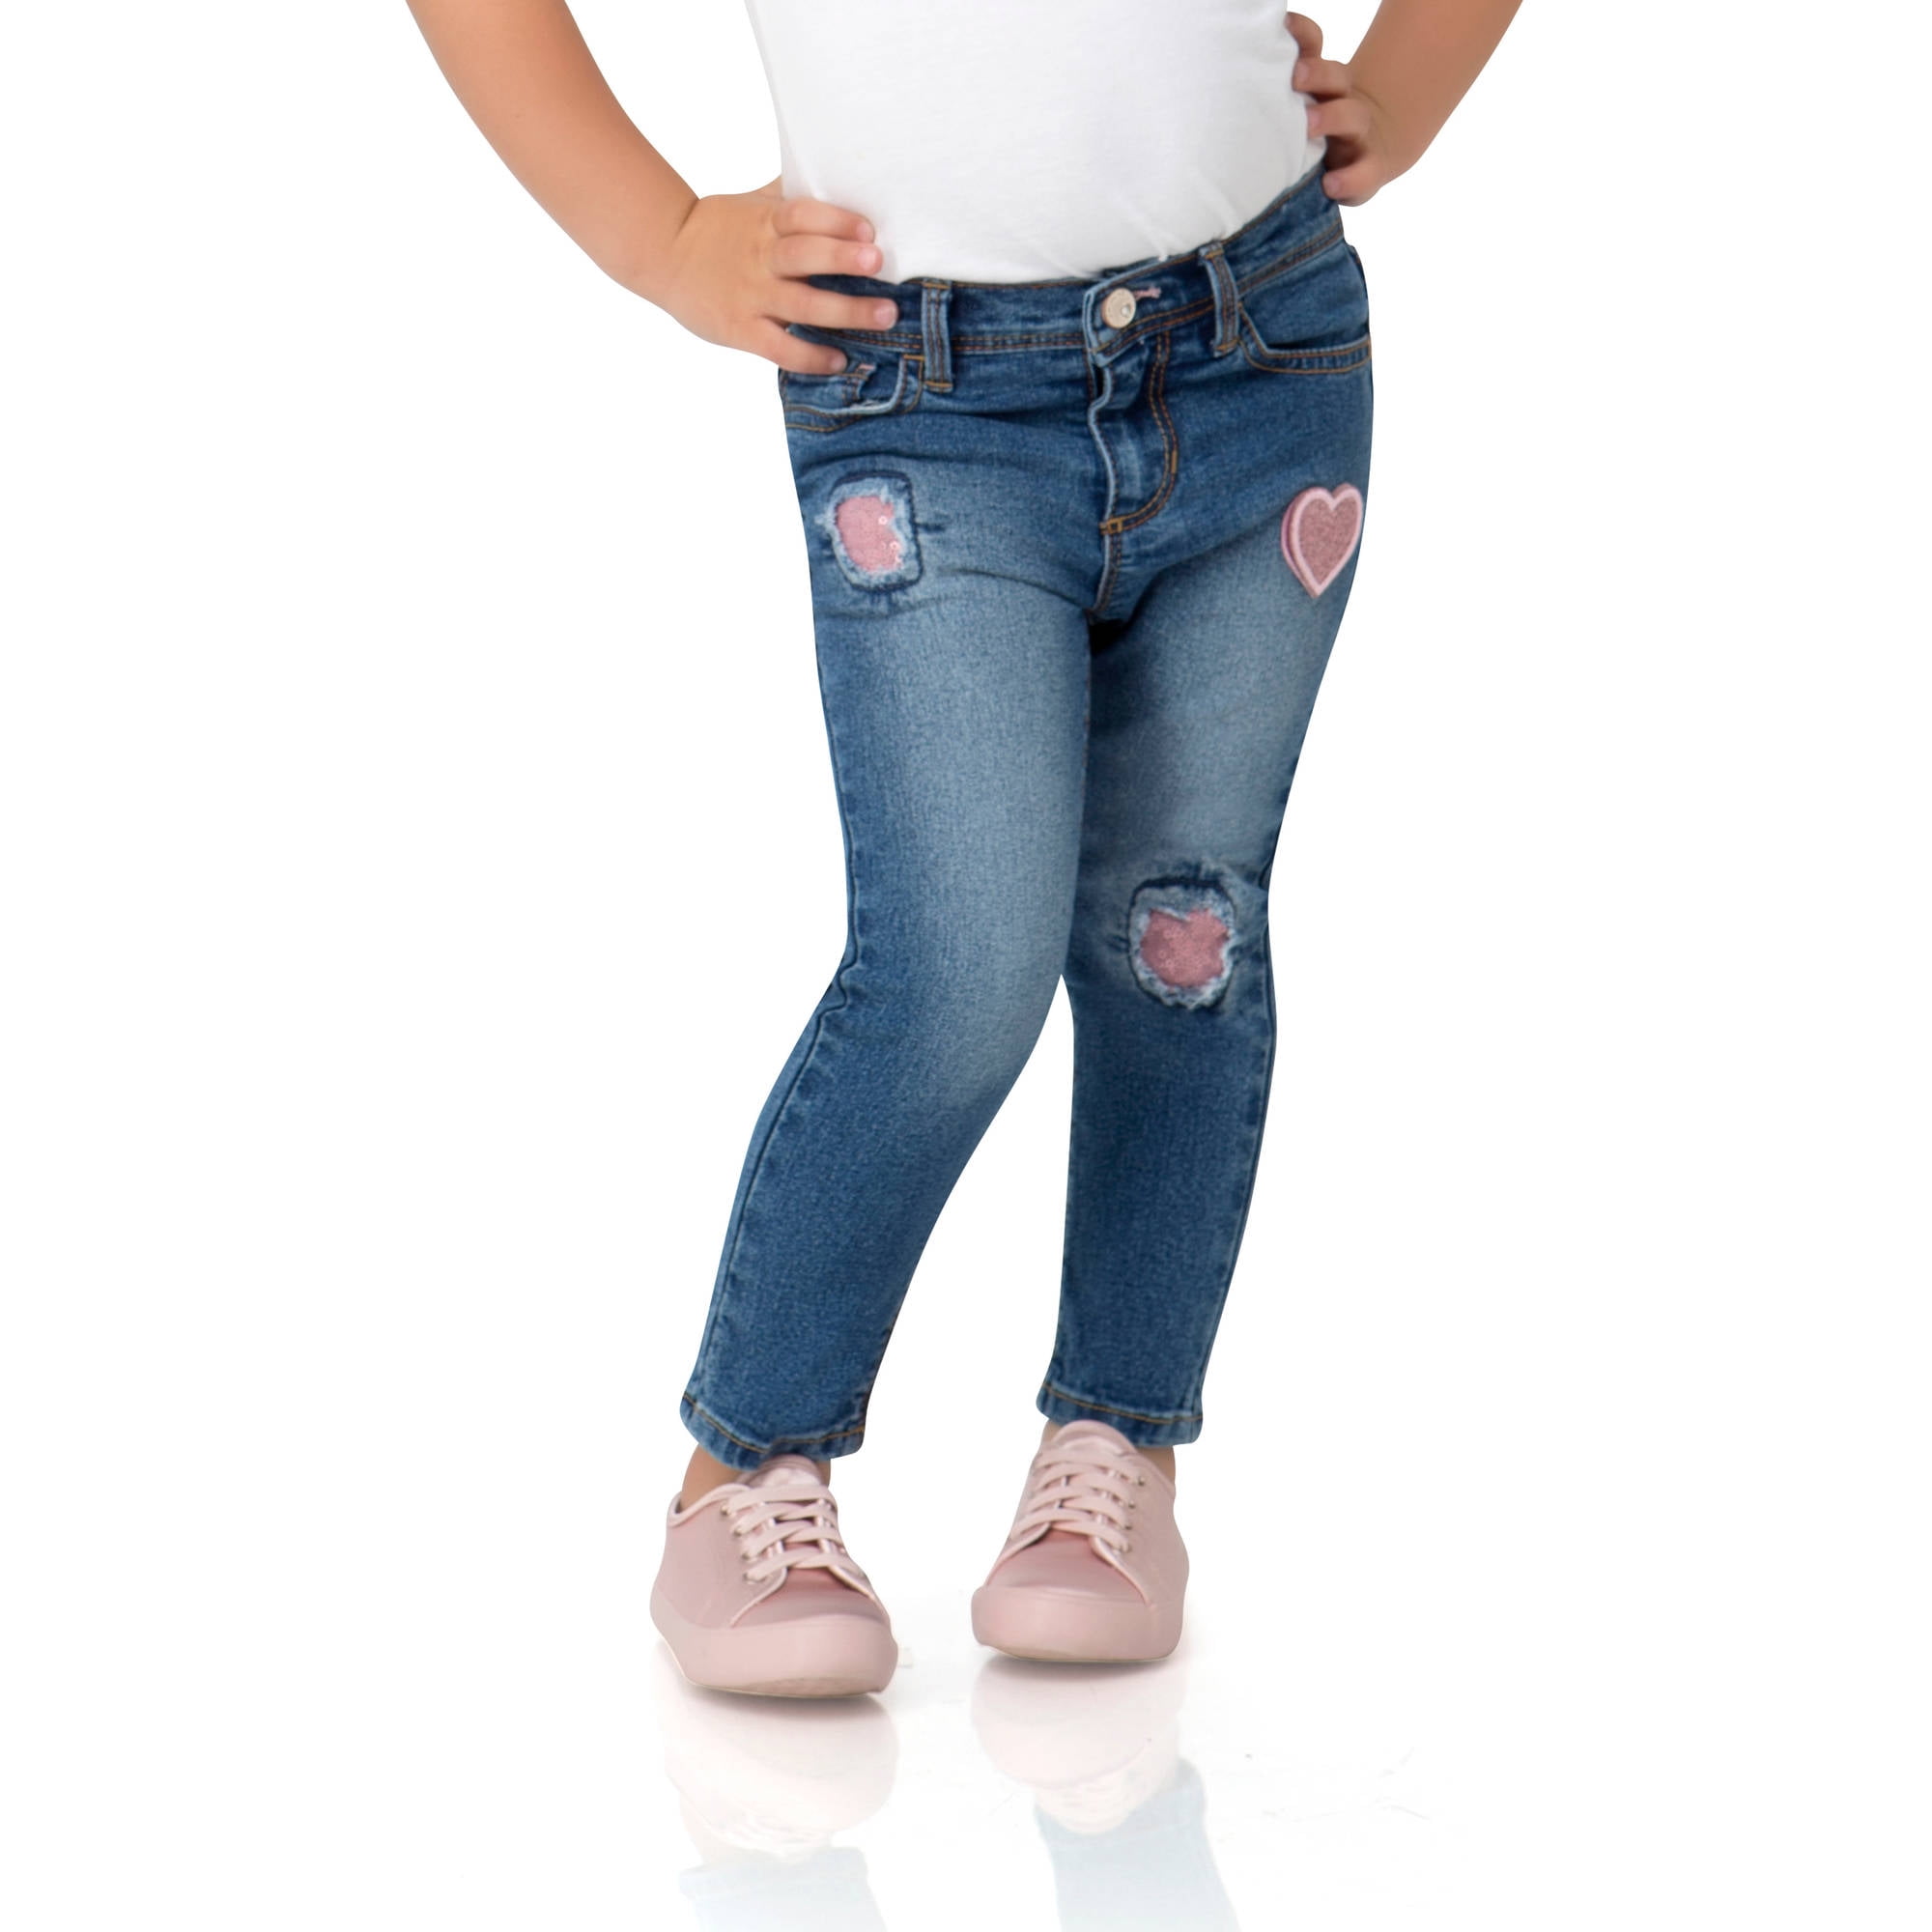 little girl jeans on sale